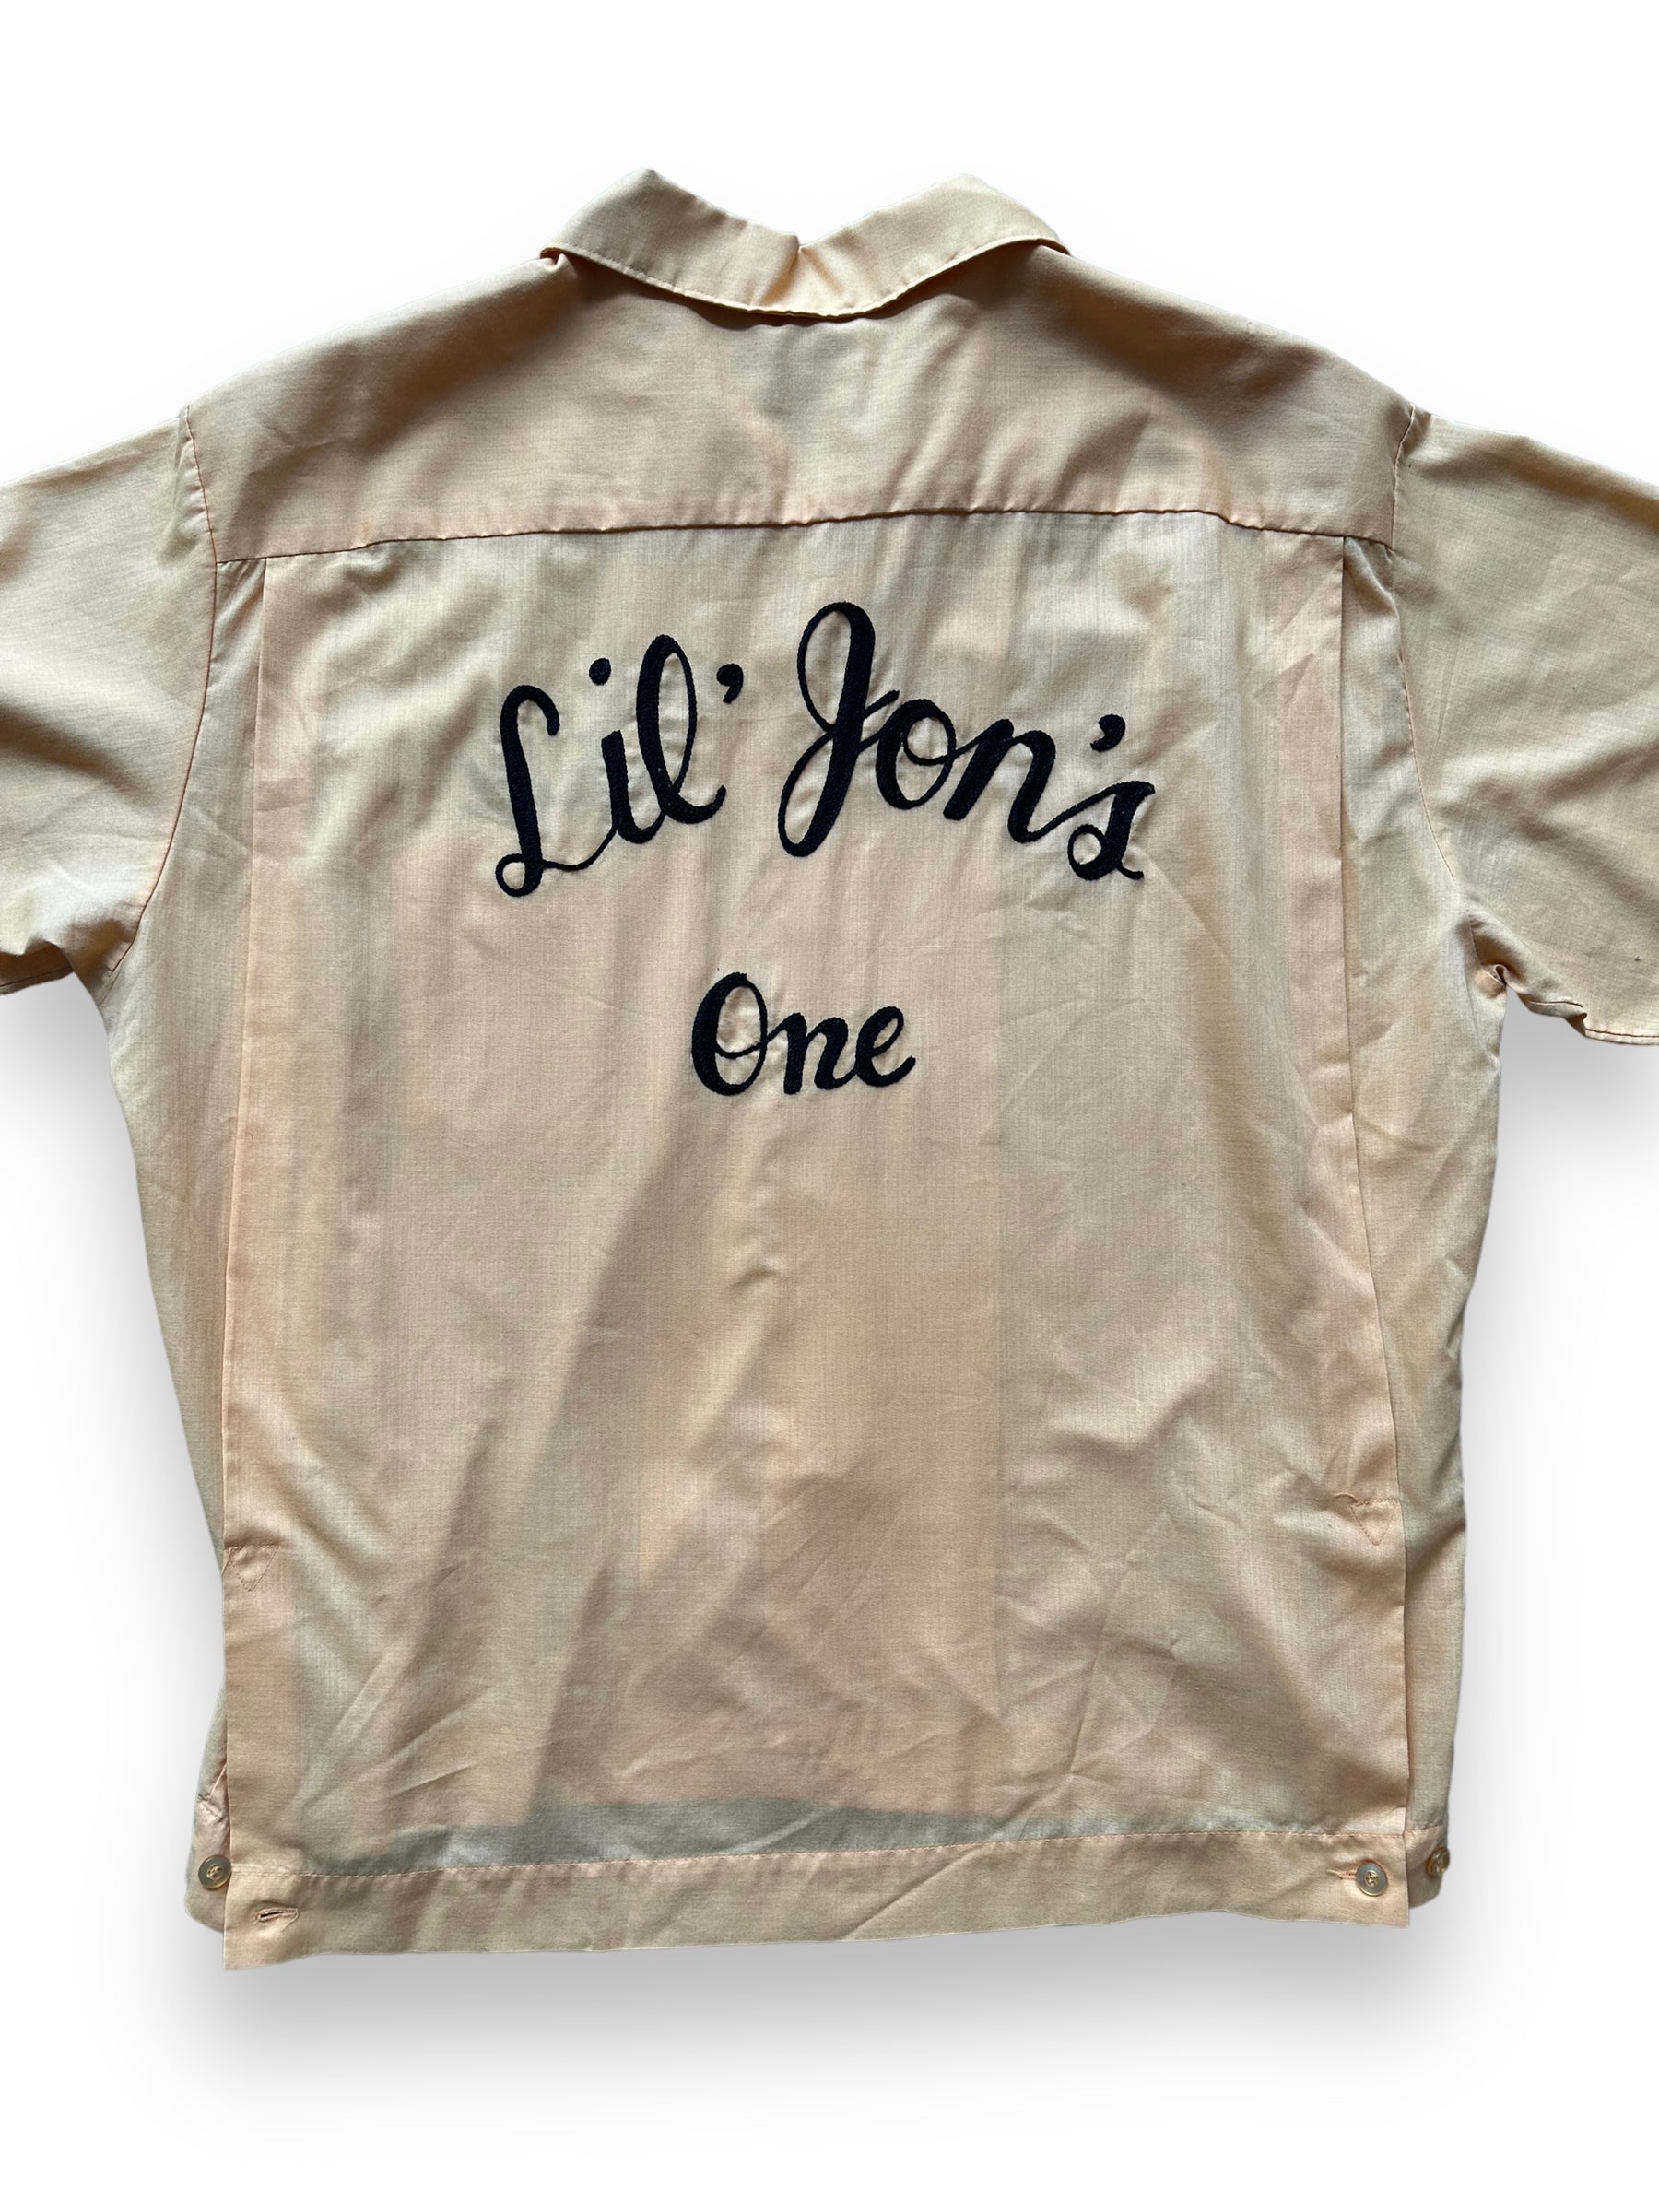 Back close up of Vintage "Lil' Jon's One" Chainstitched Bowling Shirt SZ L | Vintage Bowling Shirt Seattle | Barn Owl Vintage Seattle